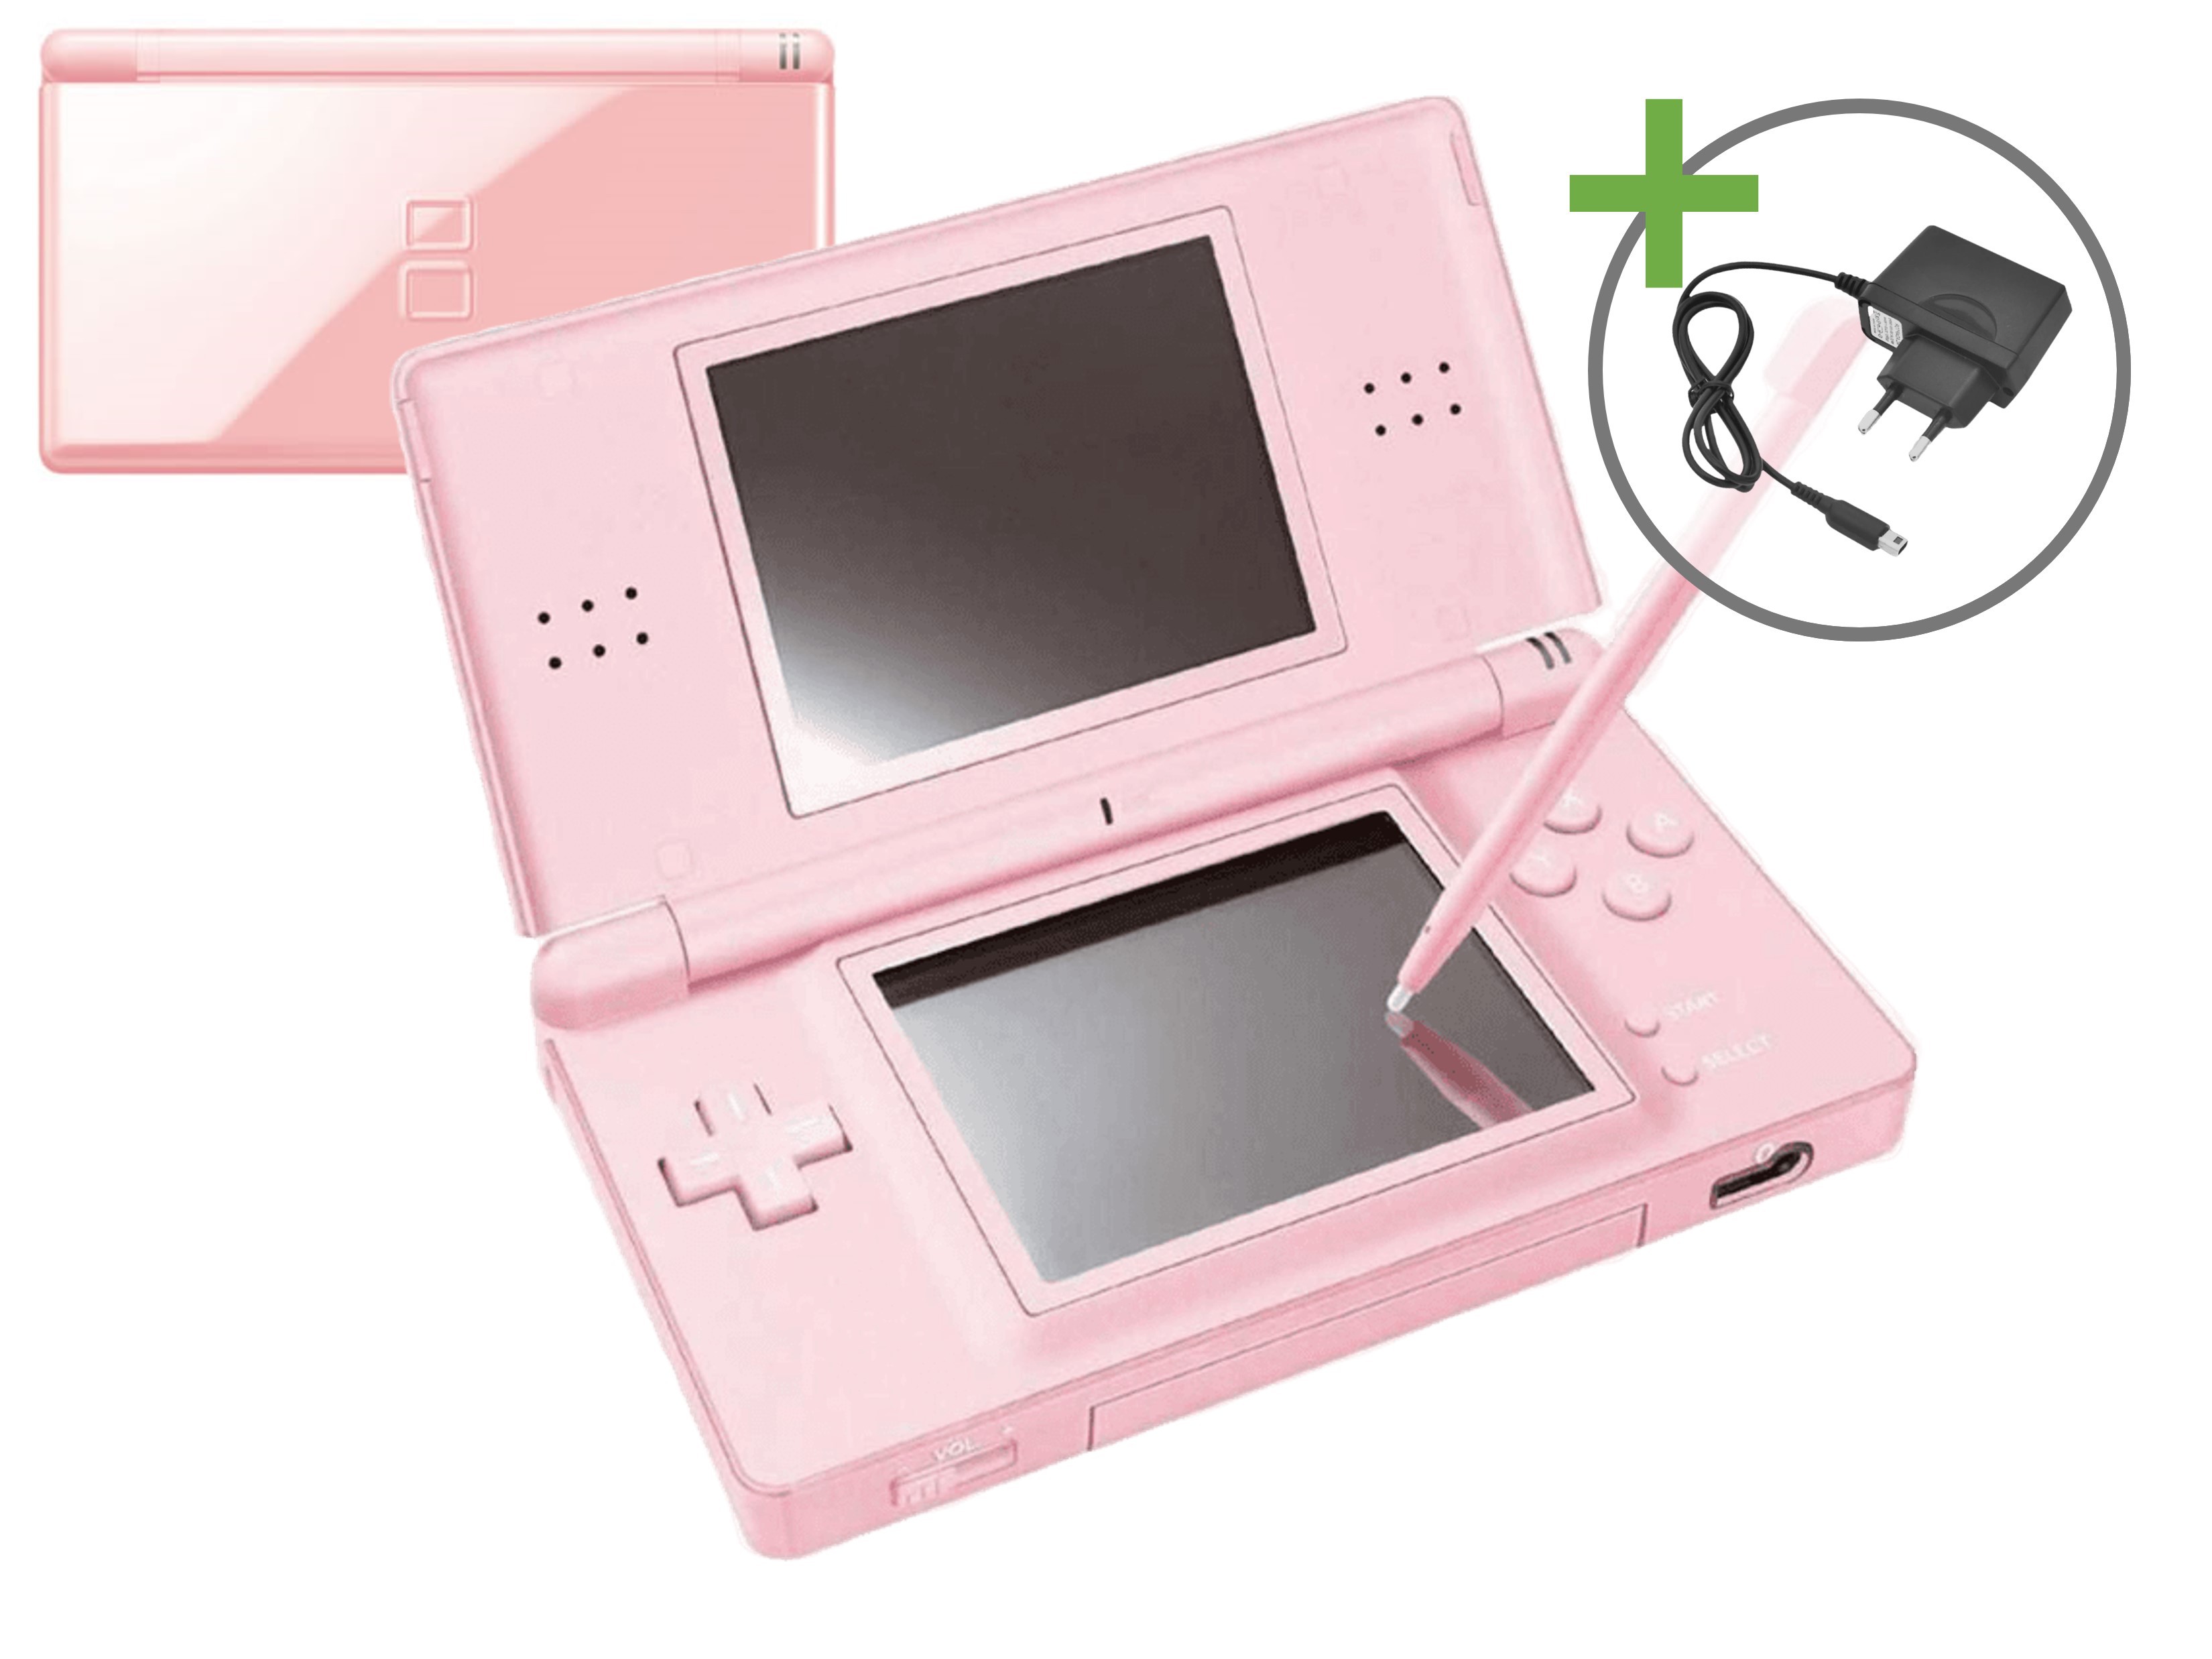 Nintendo DS Lite Pink [Complete] - Nintendo DS Hardware - 2